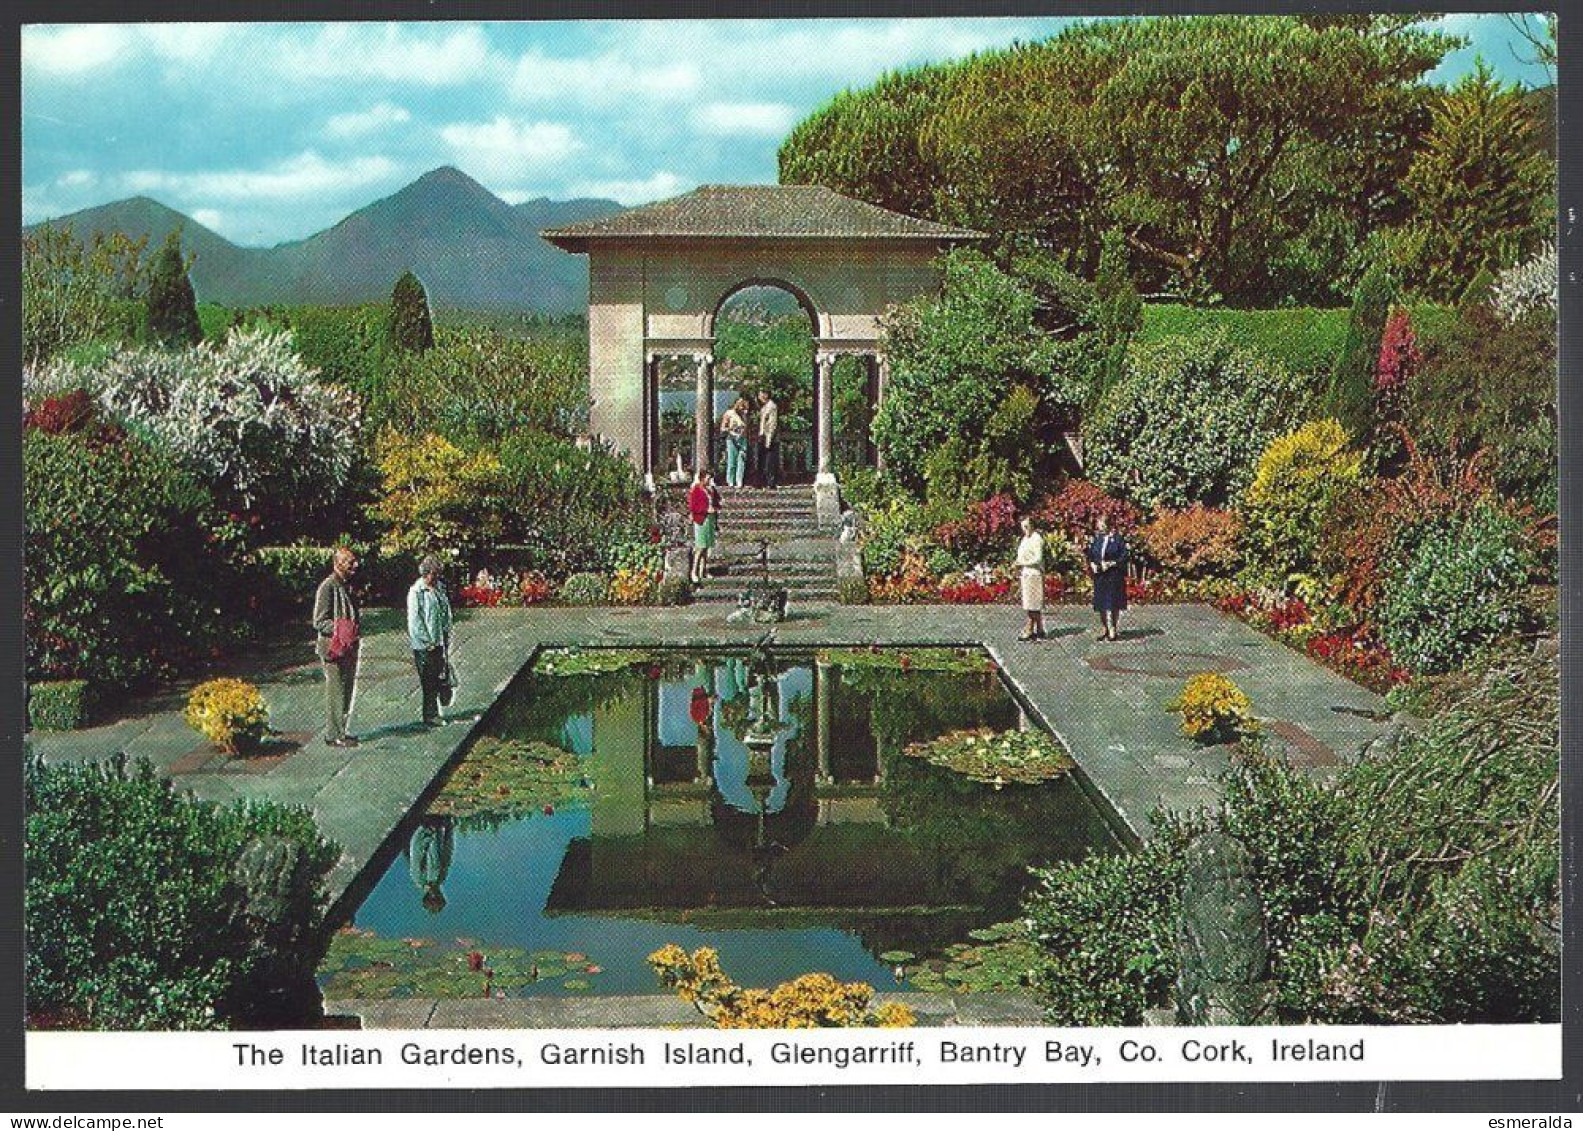 (EU)  PC 220 Cardall -The Italian Gardens,Garnish Island,Glengarriff,Bantry Bay, Co. Cork,Ireland.unused - Cork